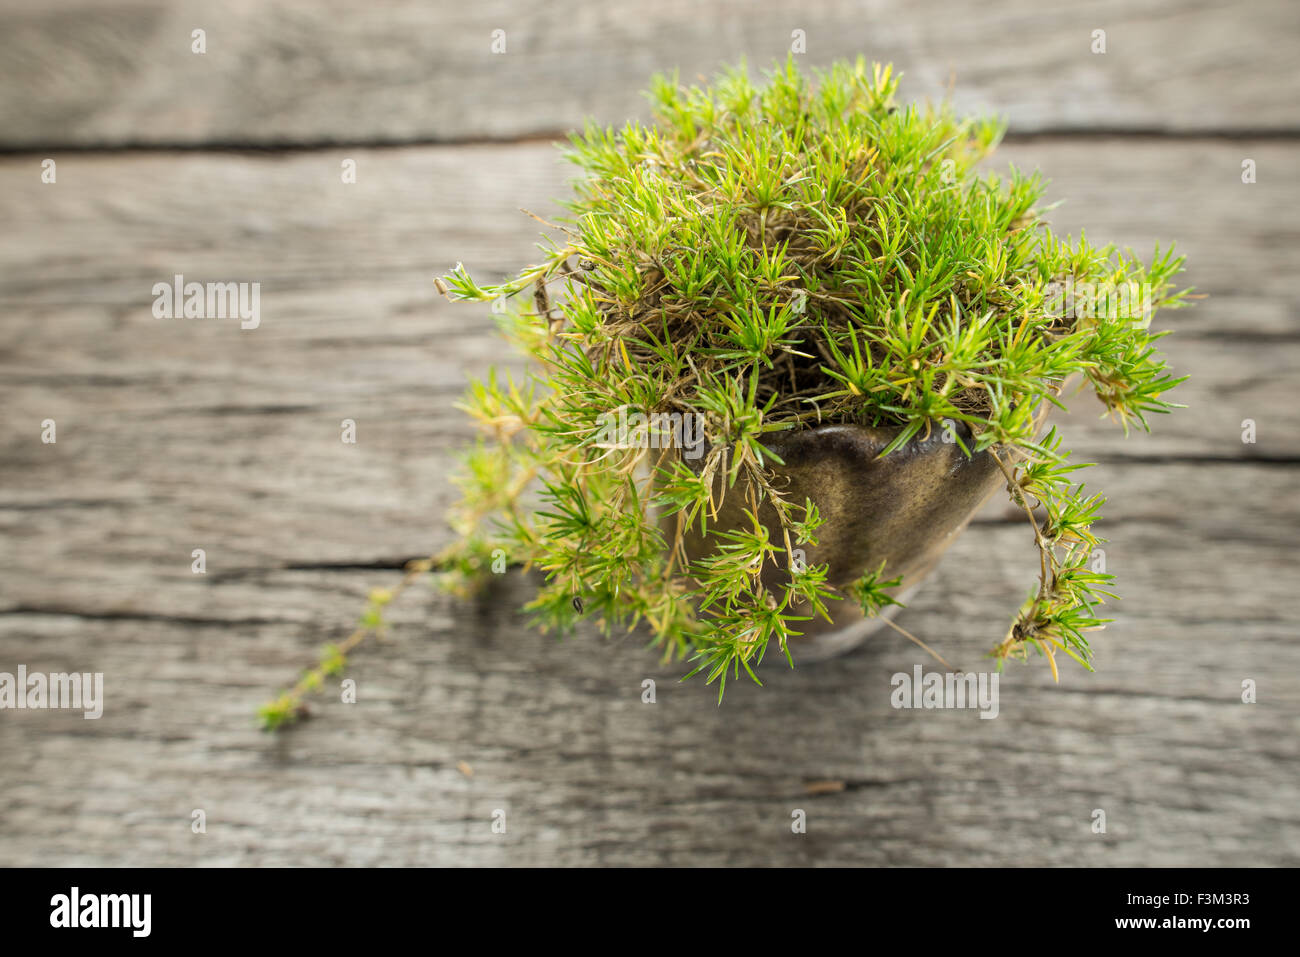 Irisch Moos (Sagina Subulata) in einem Topf Stockfotografie - Alamy